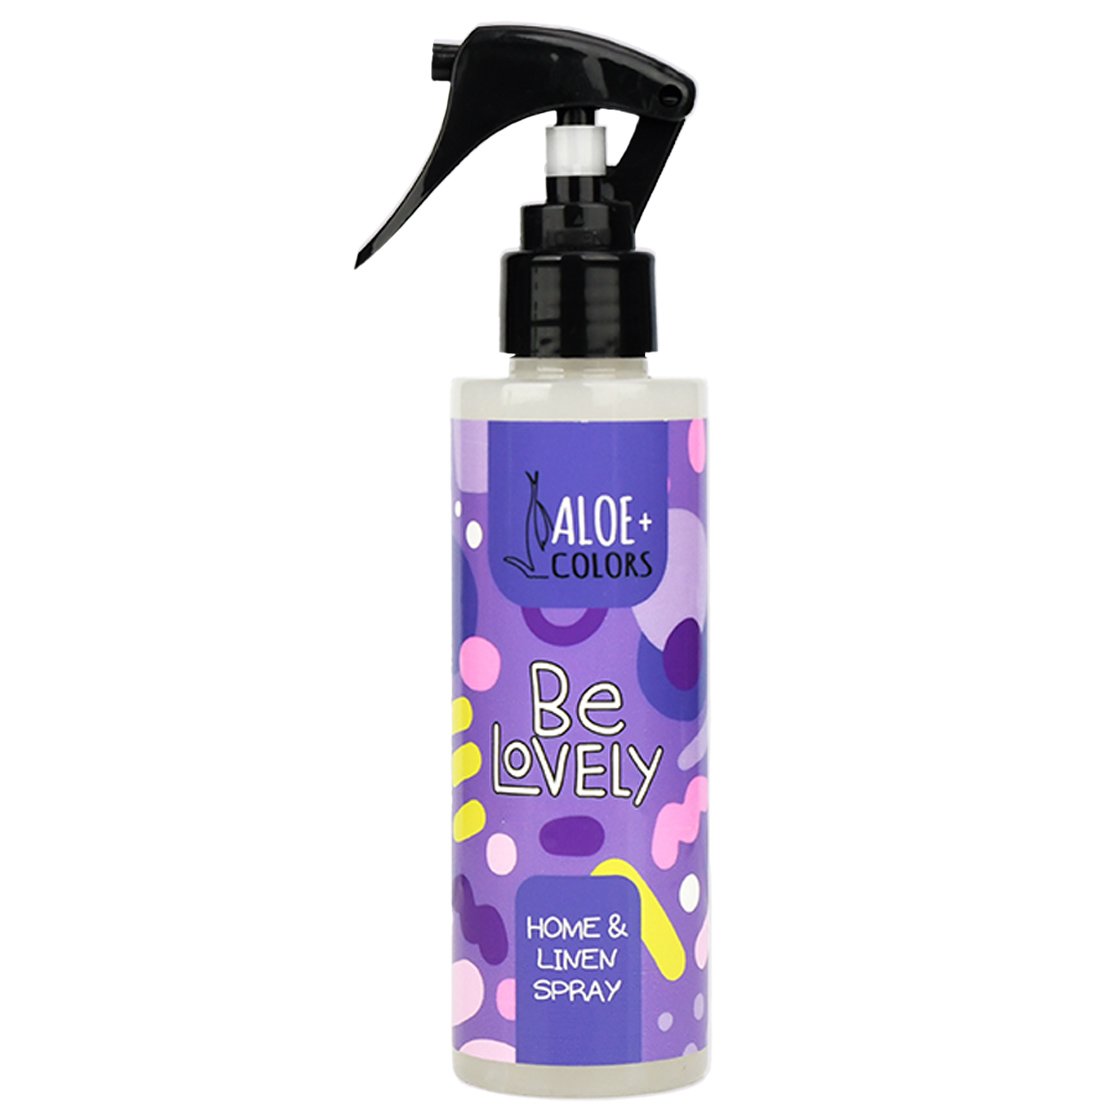 Aloe+ Colors Be Lovely Home & Linen Spray Αρωματικό Spray Χώρου & Υφασμάτων με Έντονο Άρωμα Καραμέλα, Πικραμύγδαλο 150ml 53016